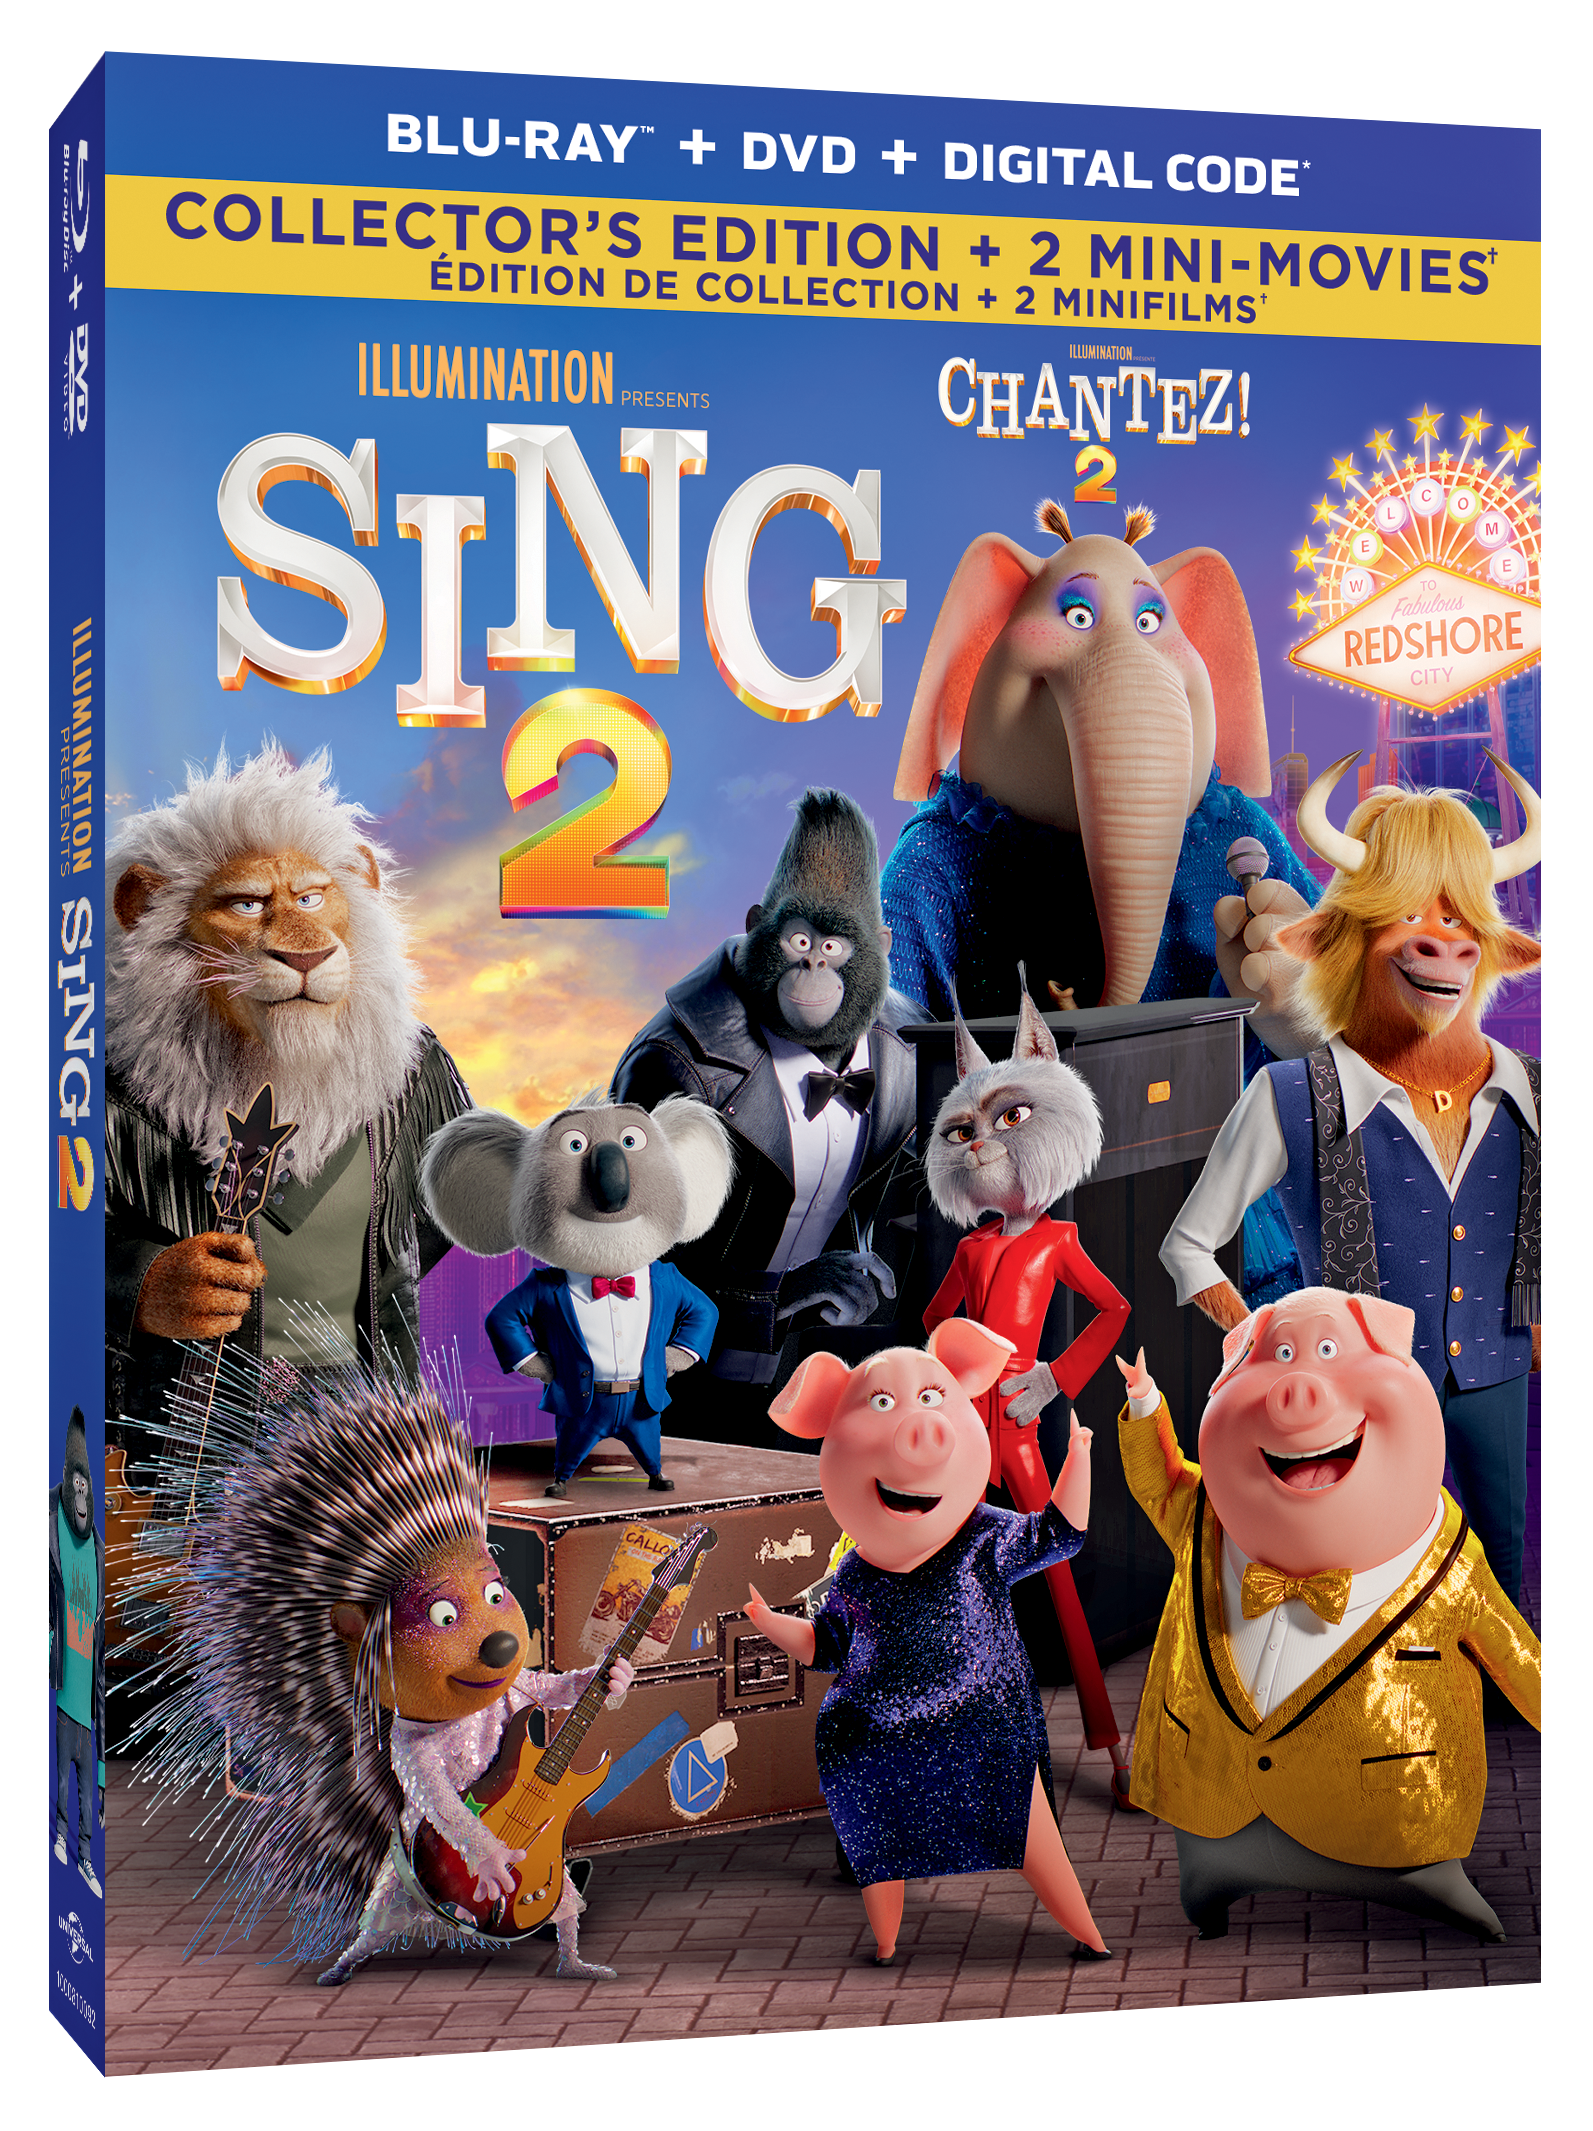 Sing 2 on Blu-Ray DVD